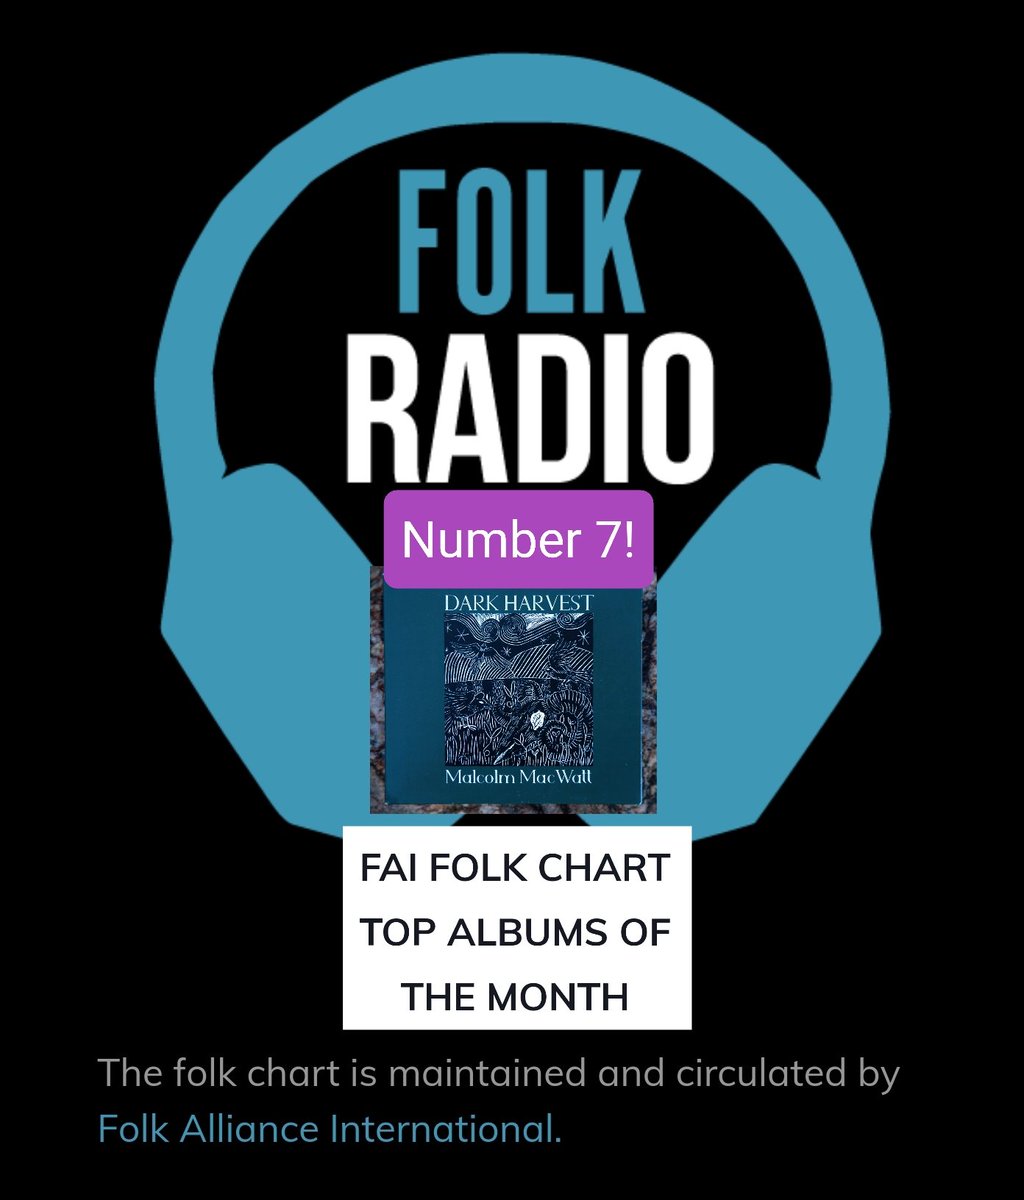 Gratifying to see 'Dark Harvest' breaking into the #Top10 @folkalliance 🇺🇸🏴󠁧󠁢󠁳󠁣󠁴󠁿 charts this month 🤩 #folkmusic #folkchart #americana #singersongwriter #music #charts #folksinger #folkalbum #newmusic #newalbum #folk #rootsmusic #folkradio #new